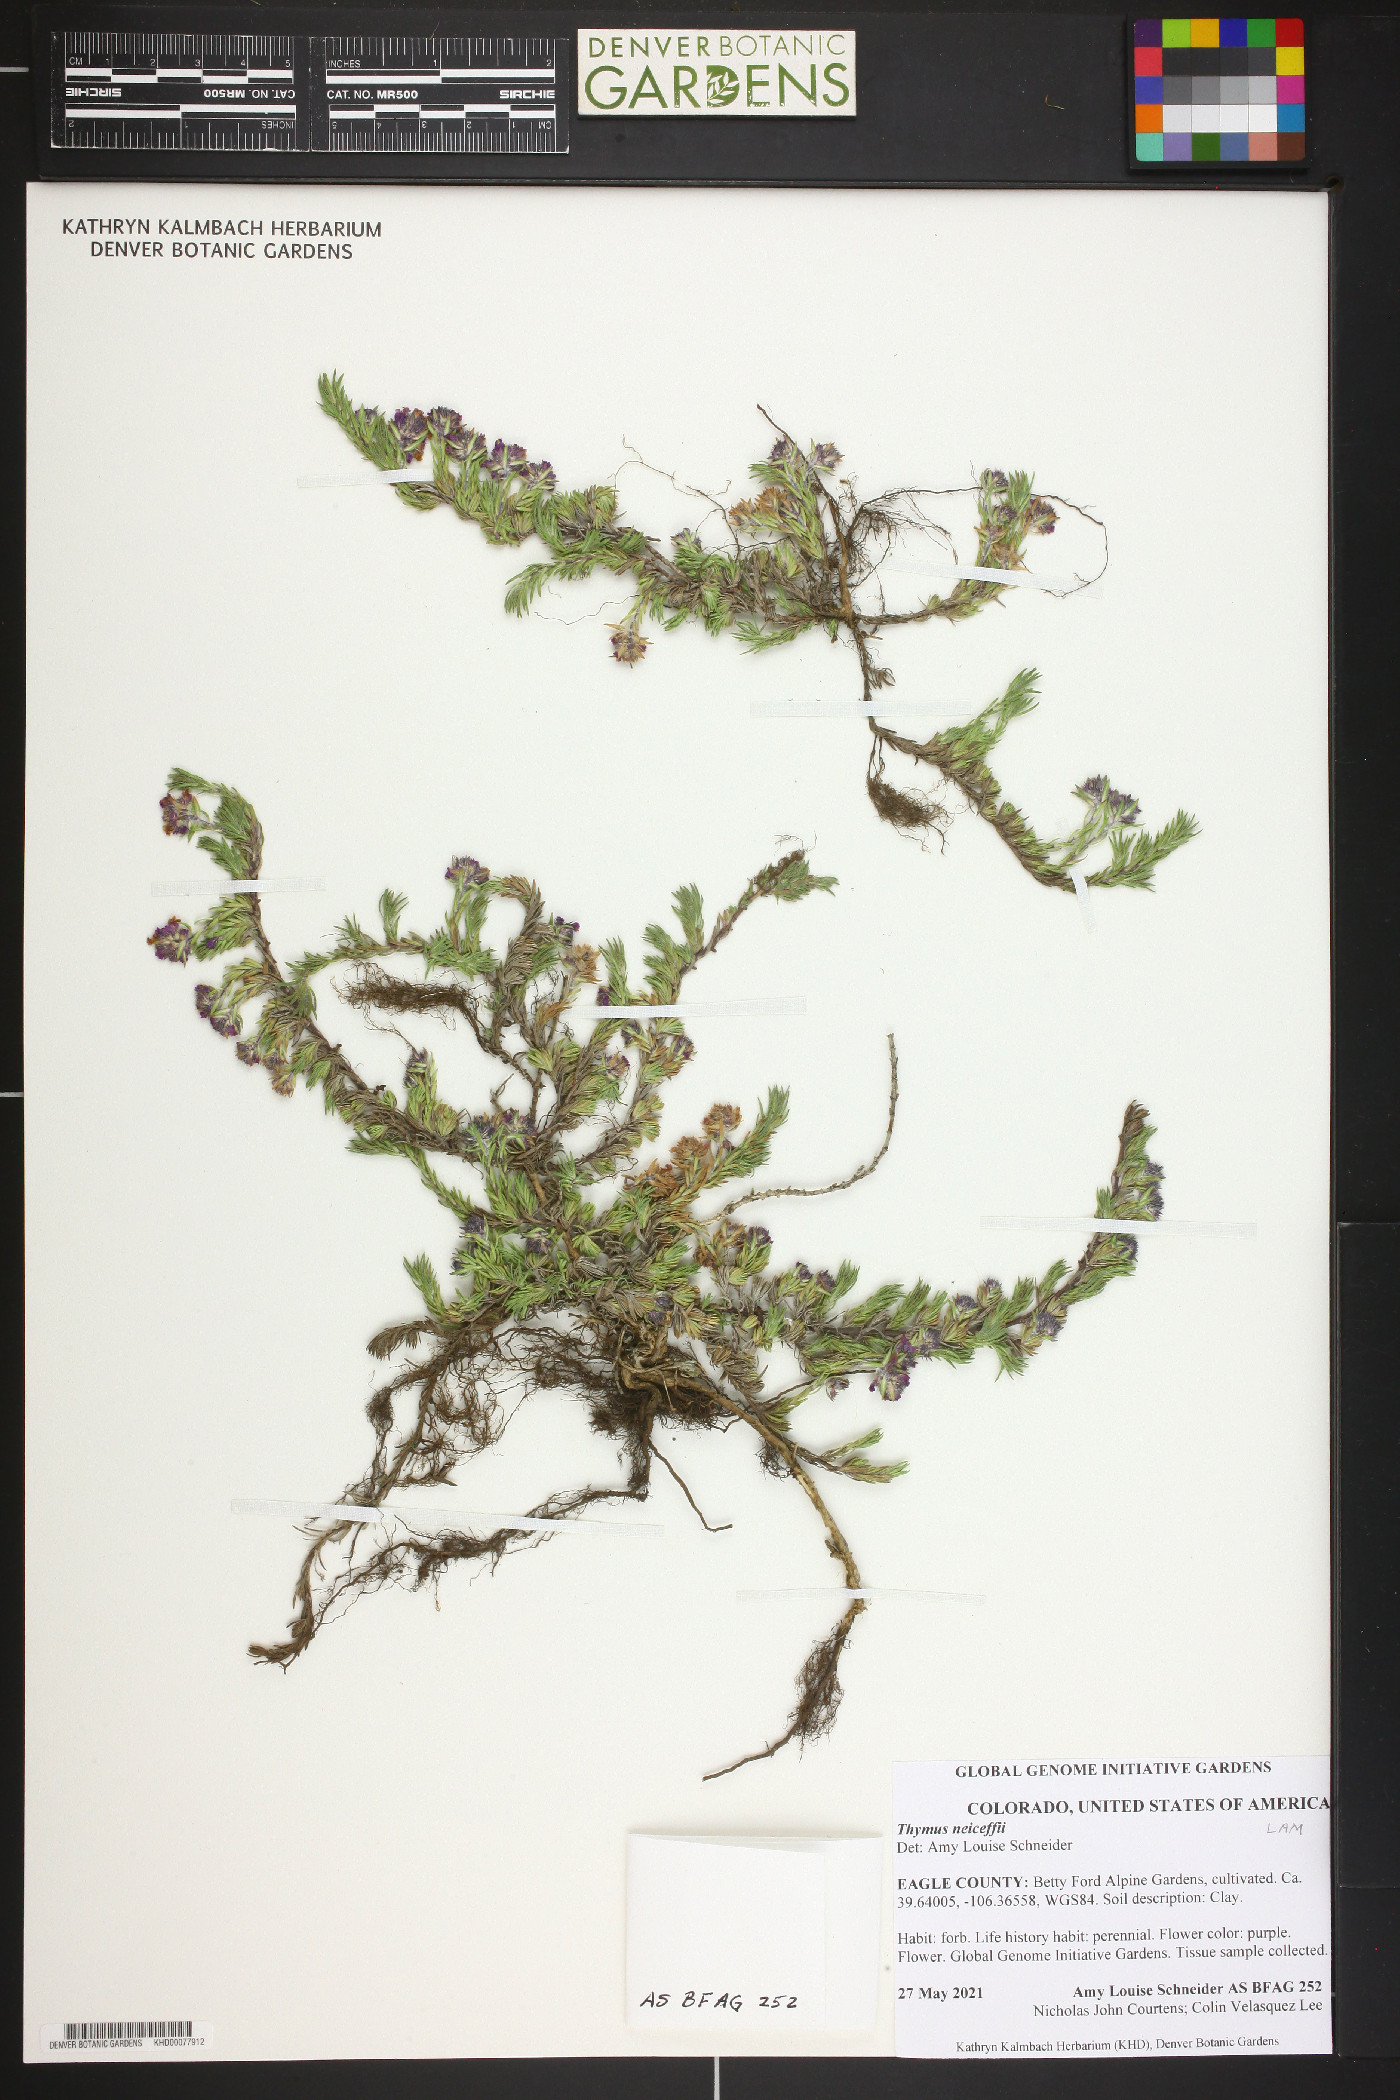 Thymus leucotrichus image